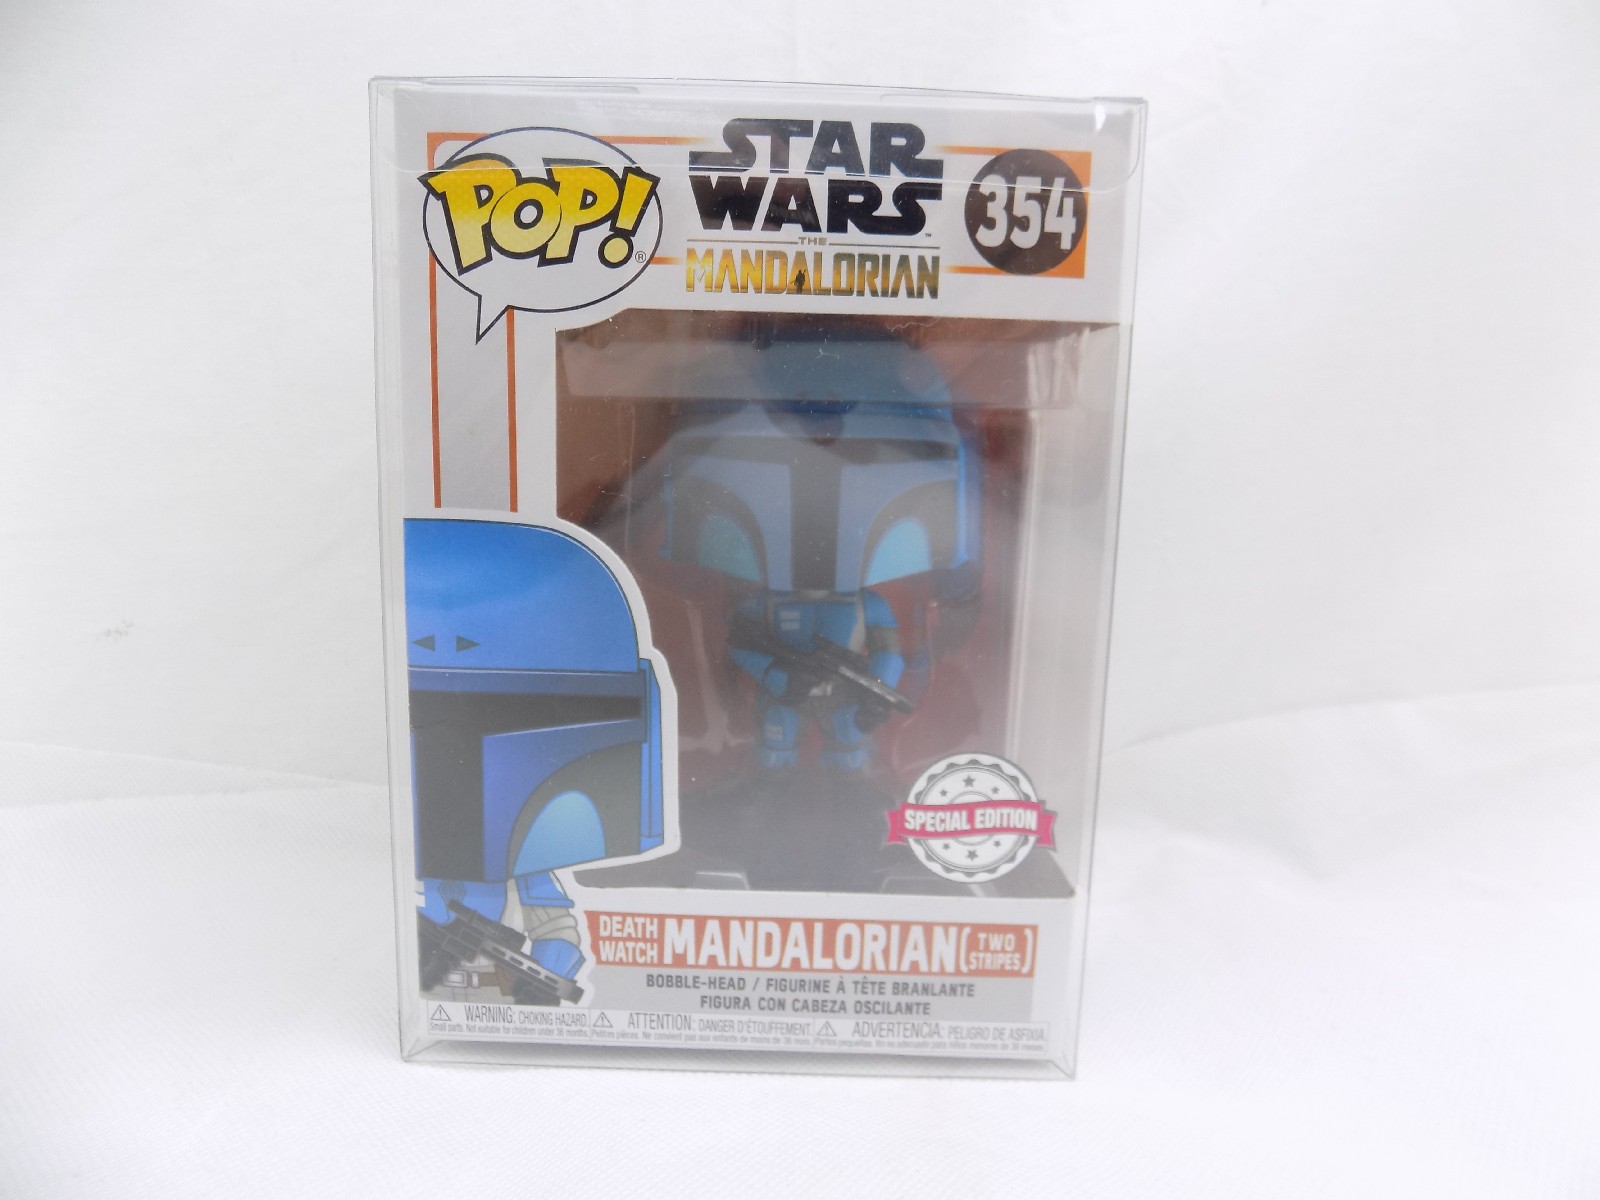 Figurine Pop Star Wars 354 - Funko Pop